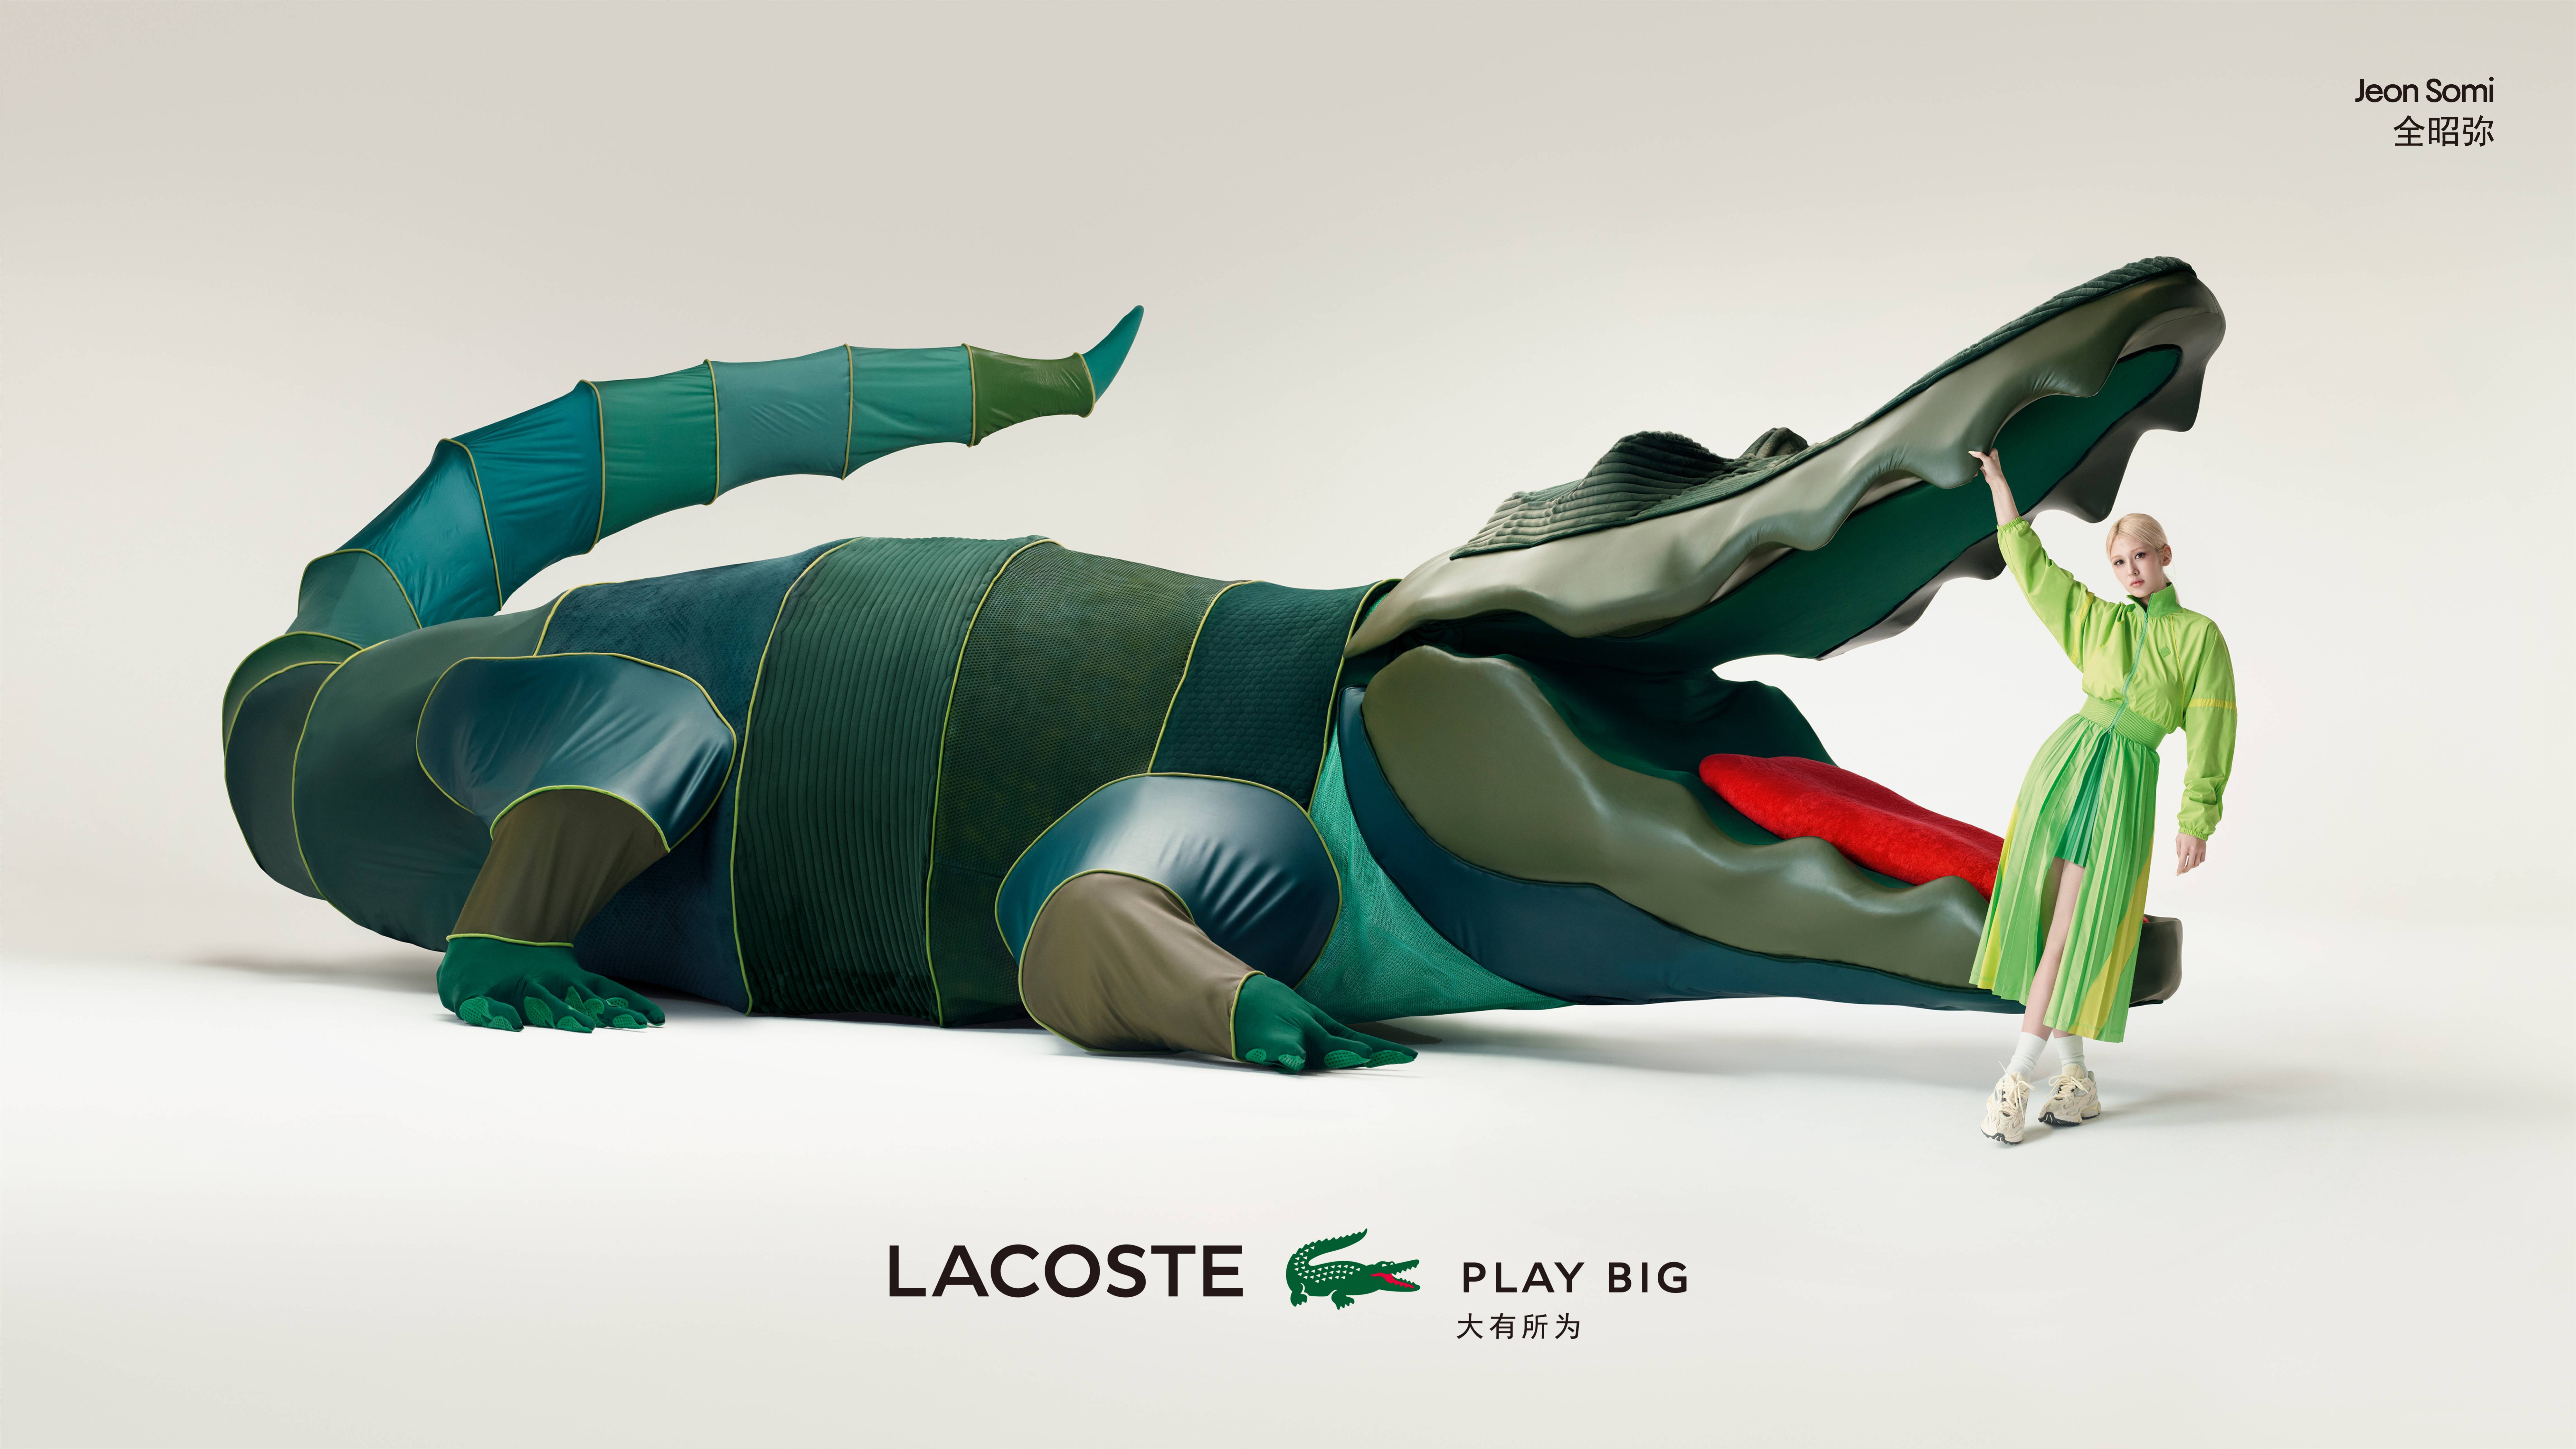 PLAY BIG —— LACOSTE 联袂全球代言人 推出全新品牌形象大片《大有所为》